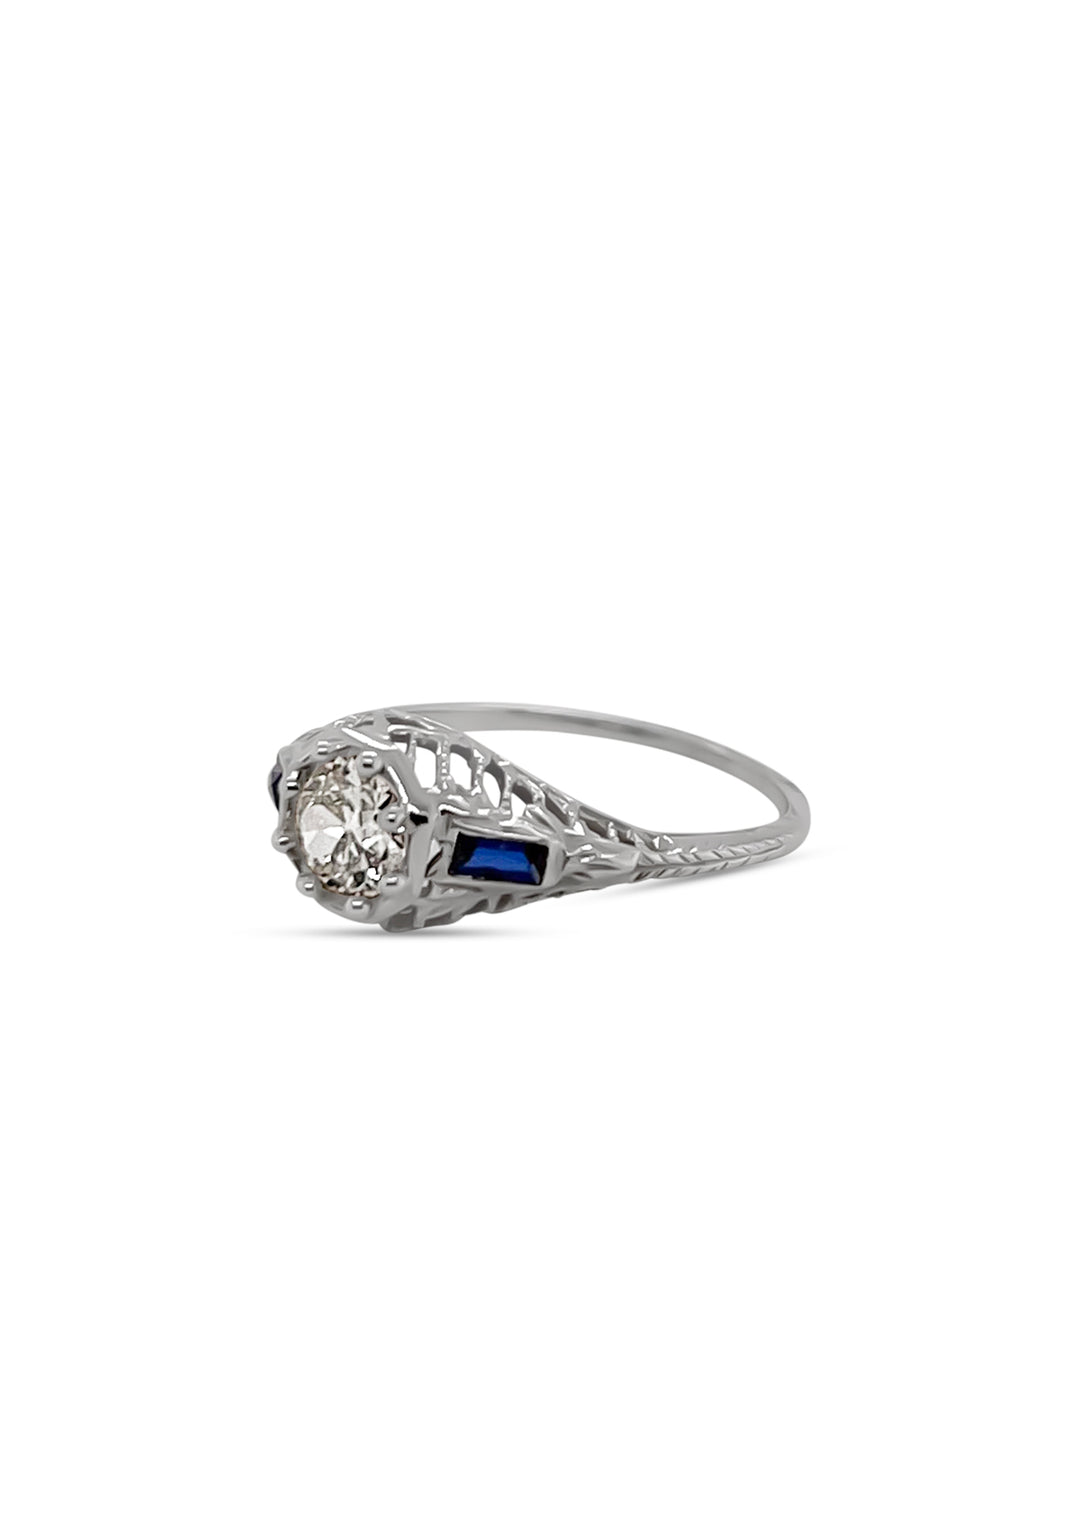 18K Art Deco Estate 0.60 Carat Diamond And Synthetic Sapphire Filigree Ring